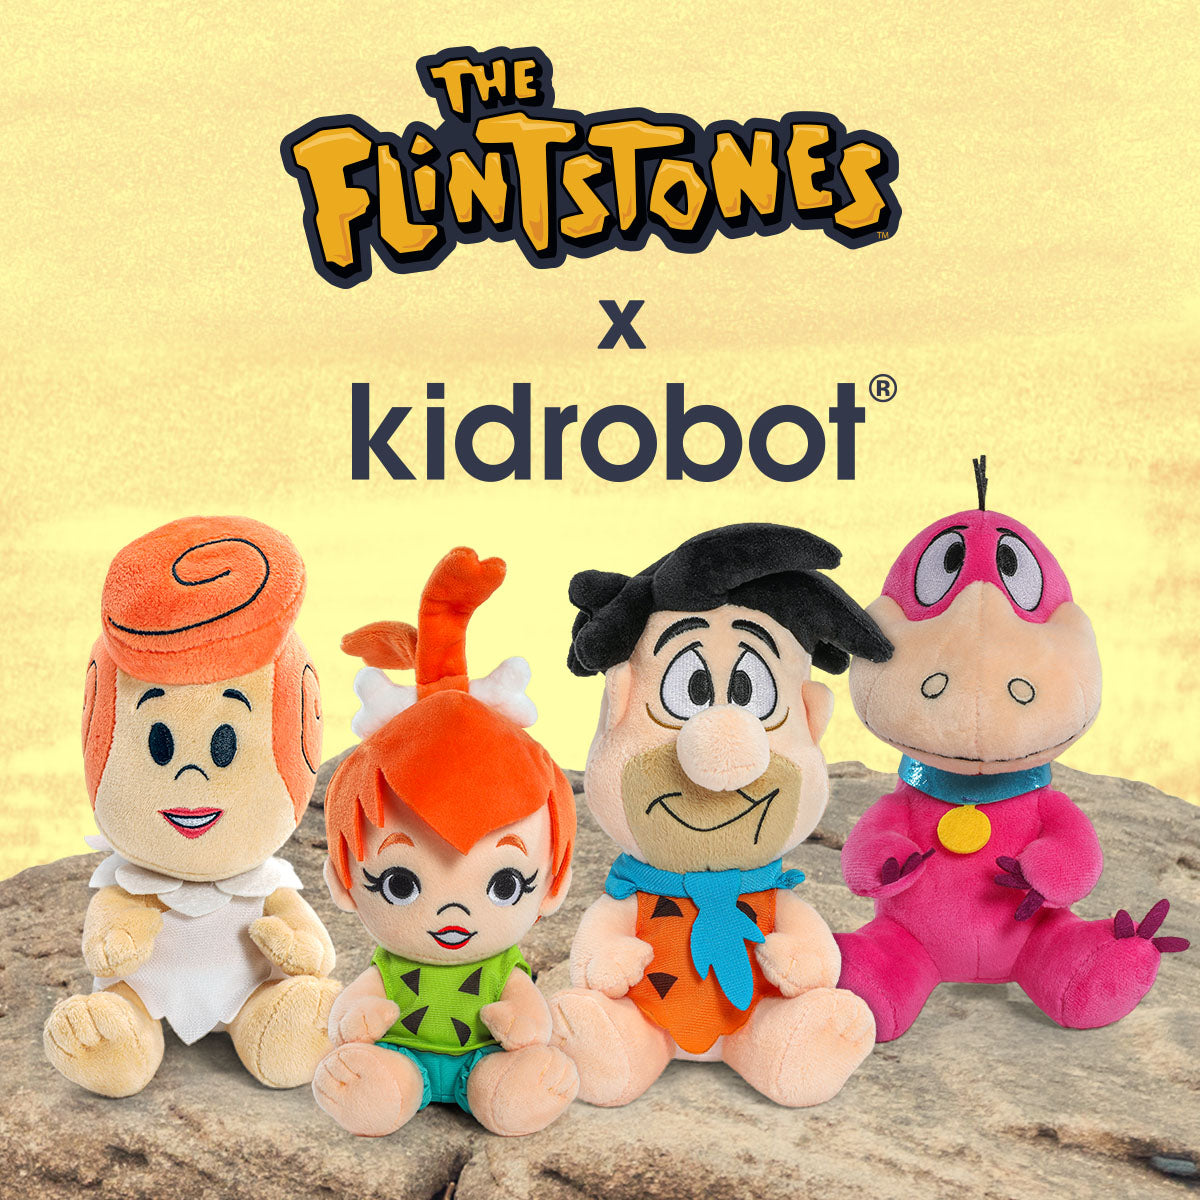 The Flintstones x Kidrobot Collection